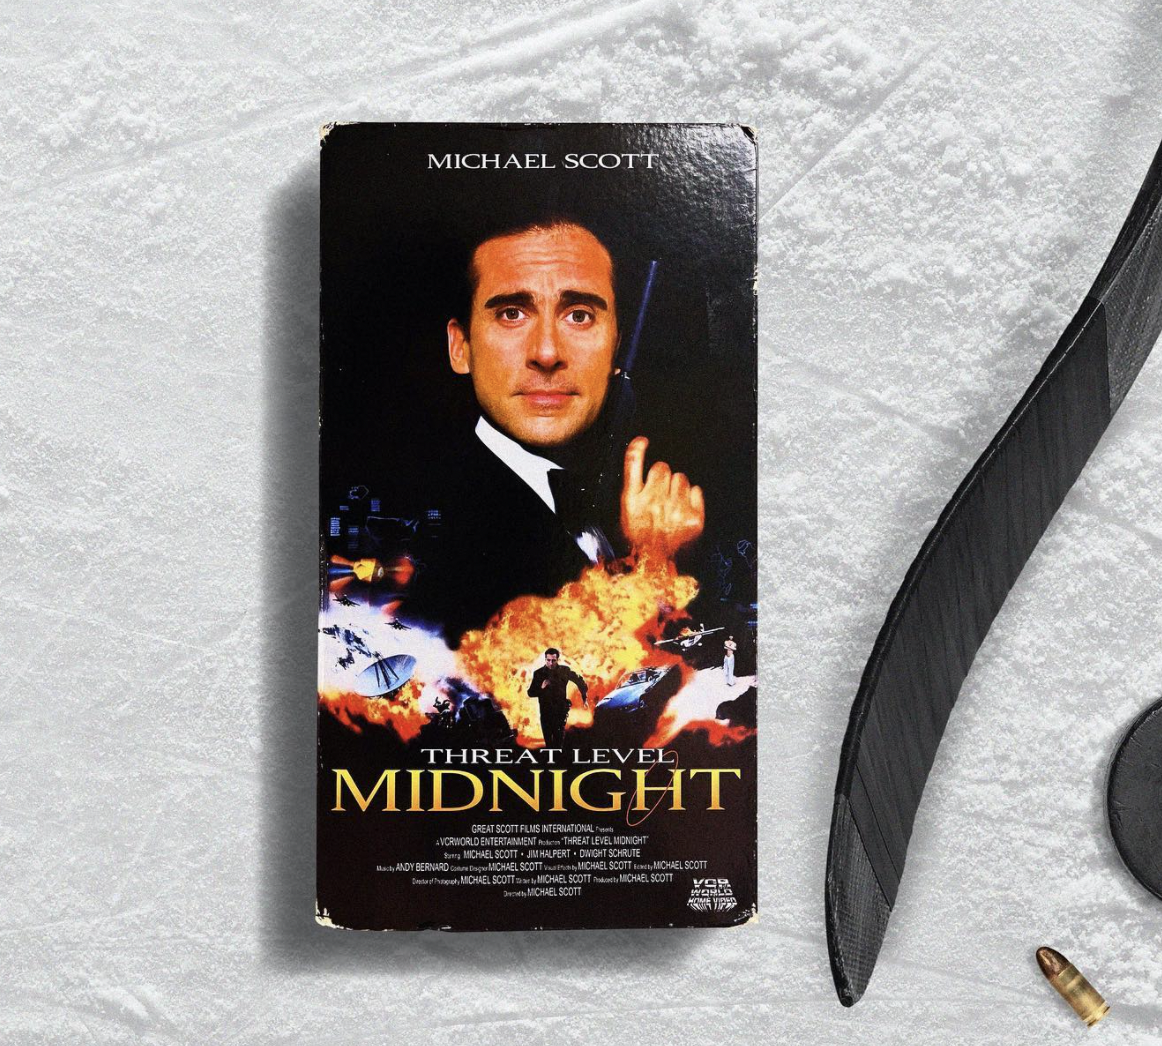 VHS tape edits - Michael Scott Threat Level Midnight Gosto Romtrail Mond M Morsoon Vote M Hu